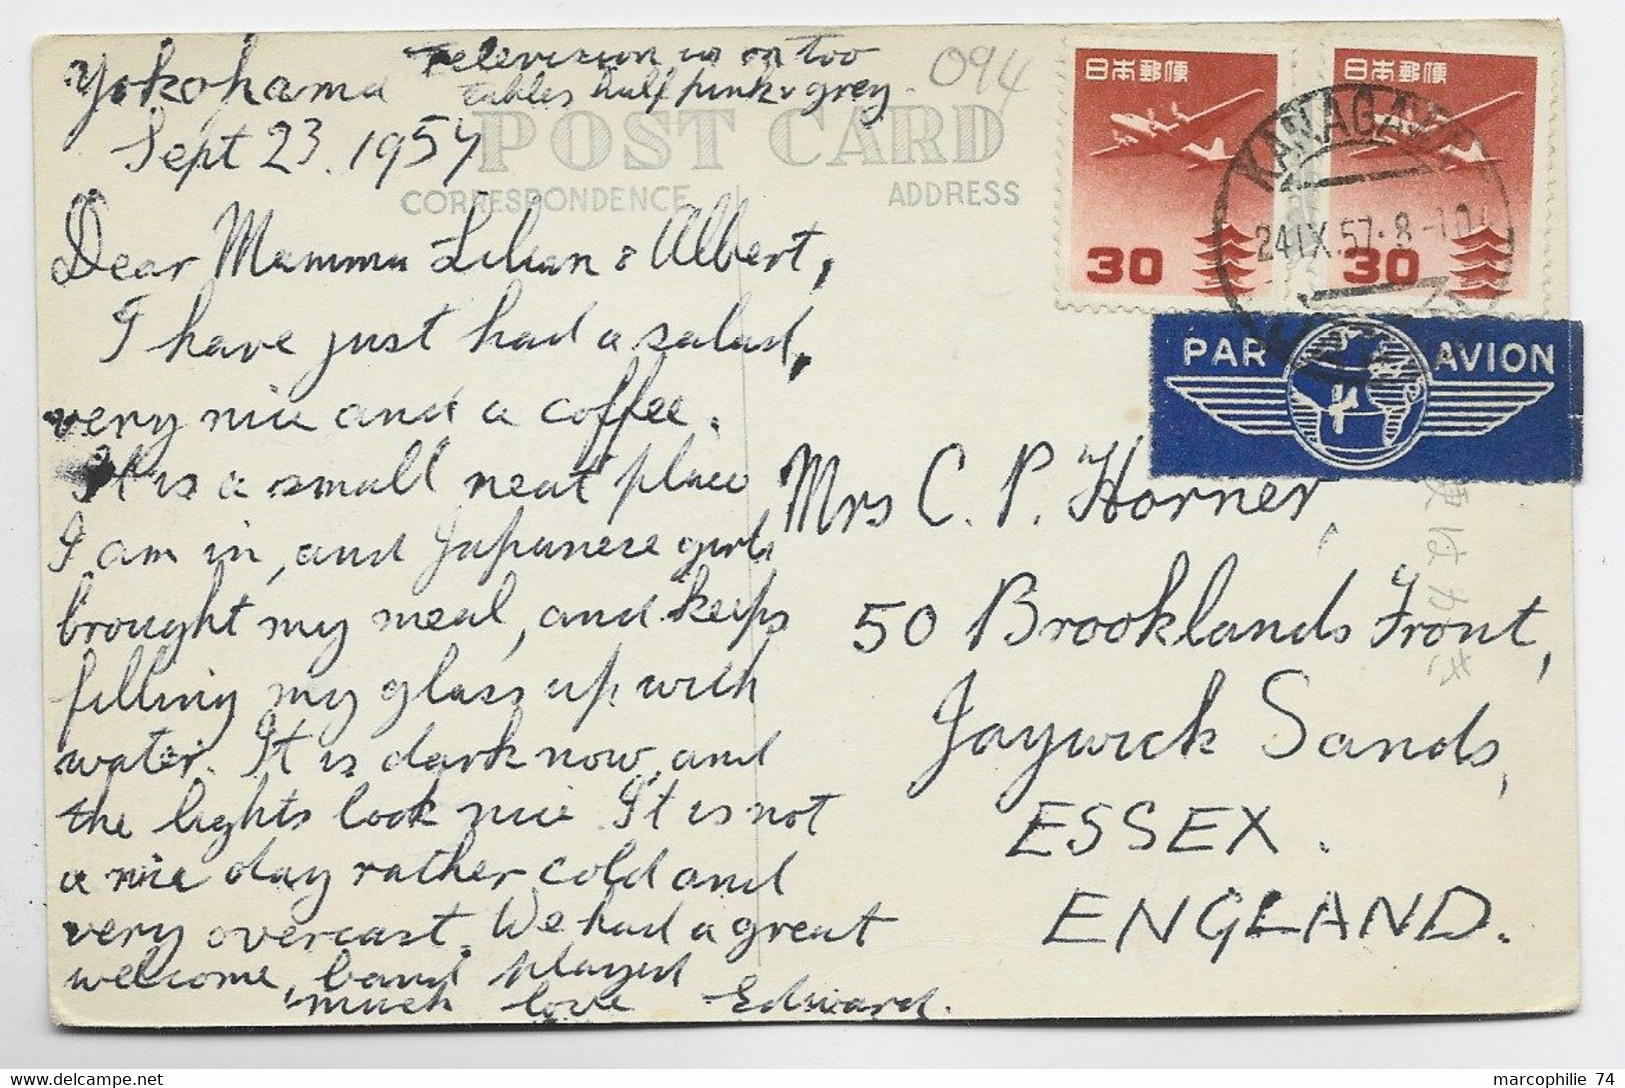 JAPAN JAPON PA 30CX2  AVION KANAGAWA 24.IX.1957 JAPAN CARD YOKOHAMA TO ENGLAND - Briefe U. Dokumente